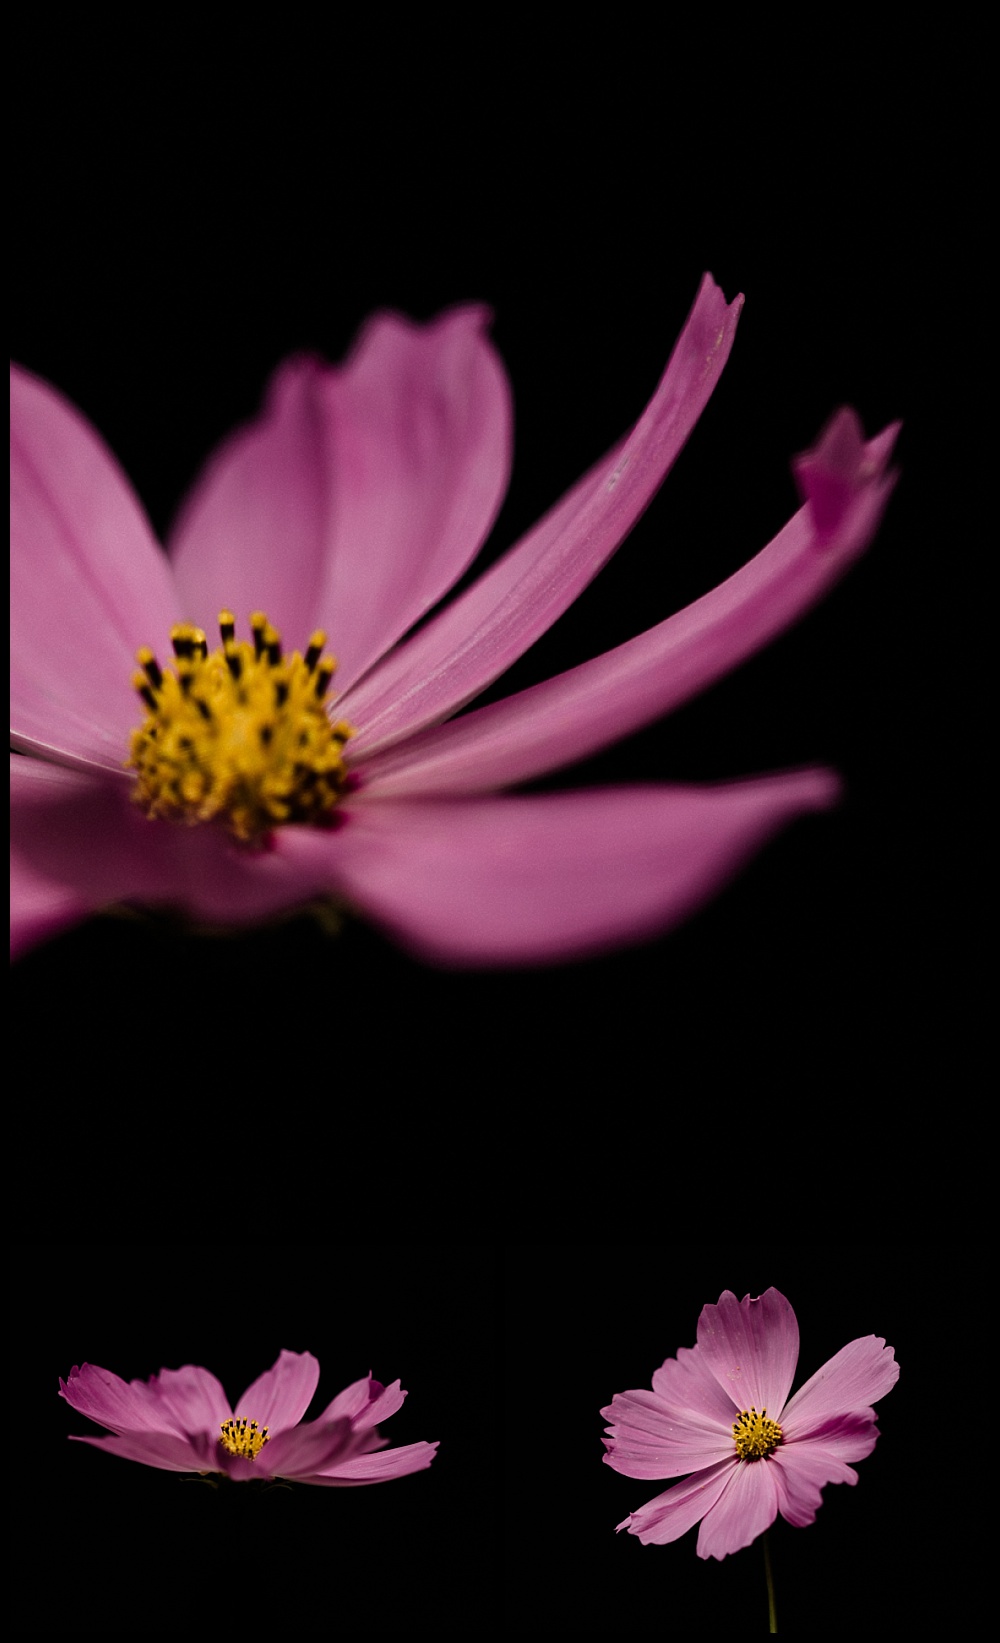 three photos of a light pink cosmos flower